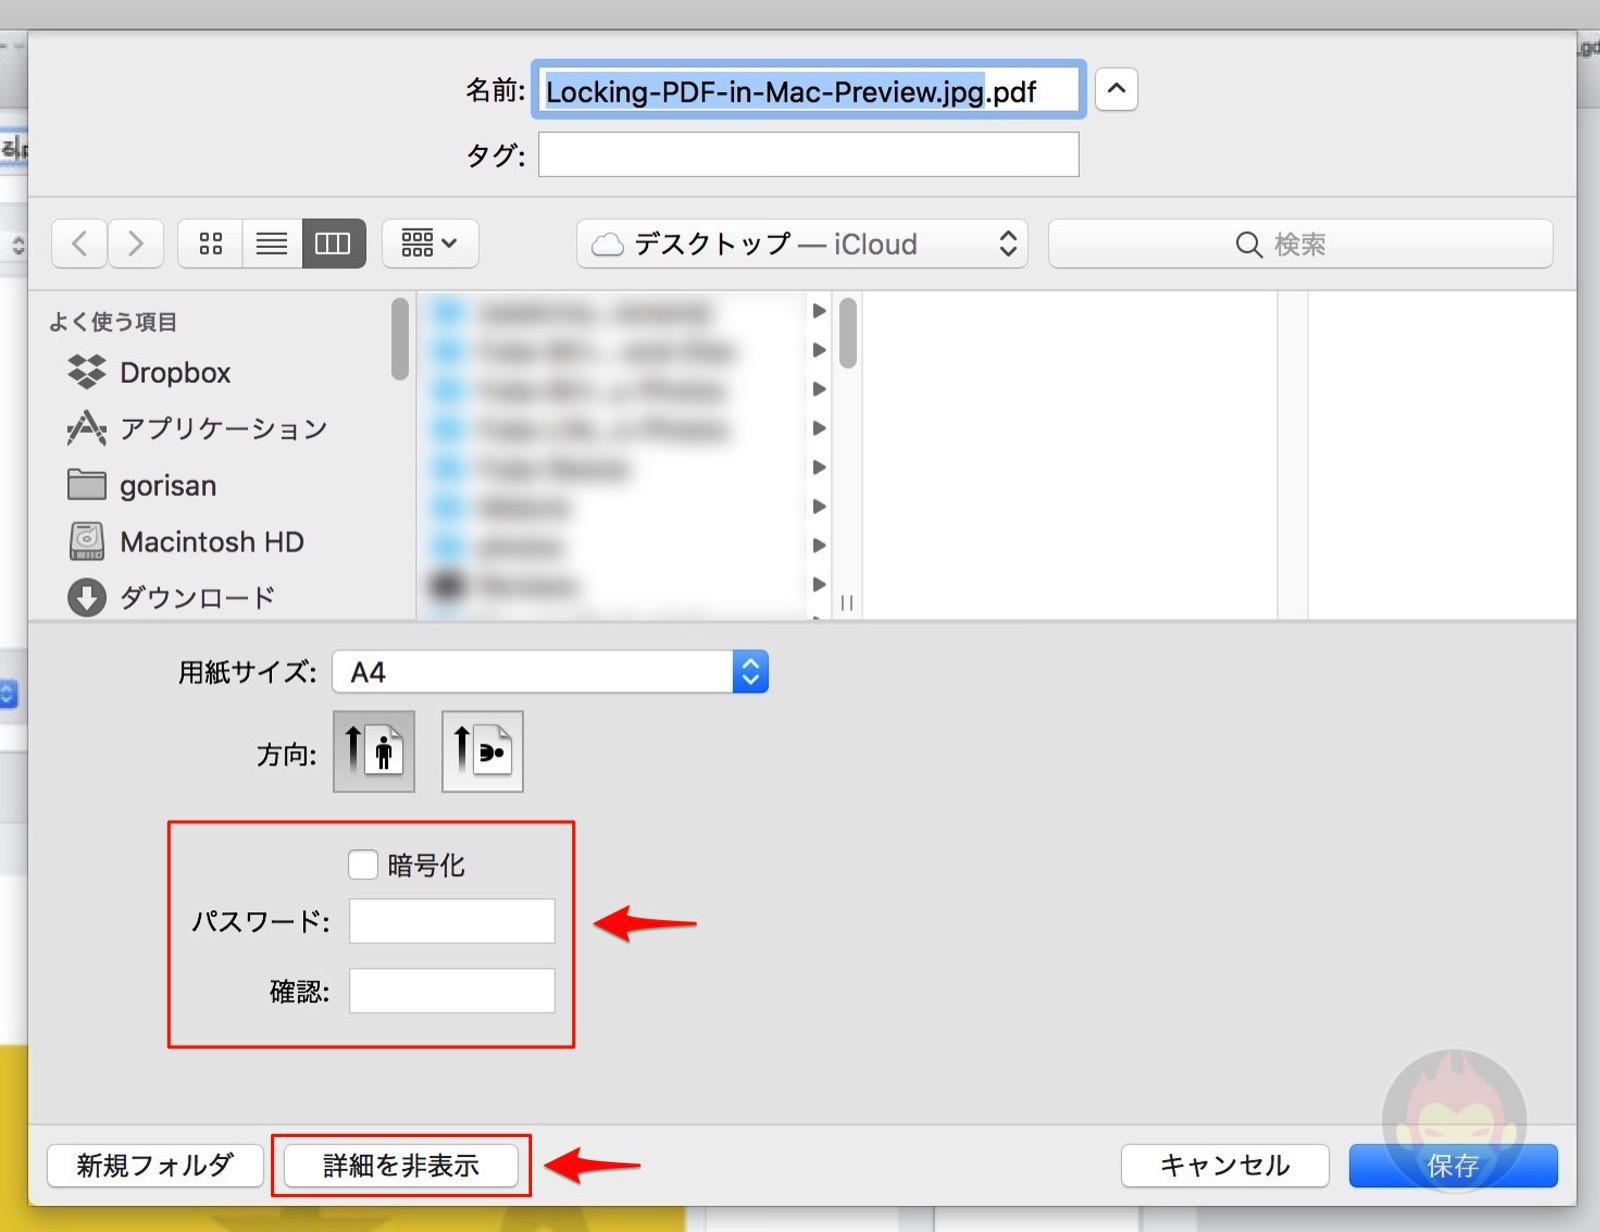 Mac-Preview-PDR-Lock-Export-01-2.jpg